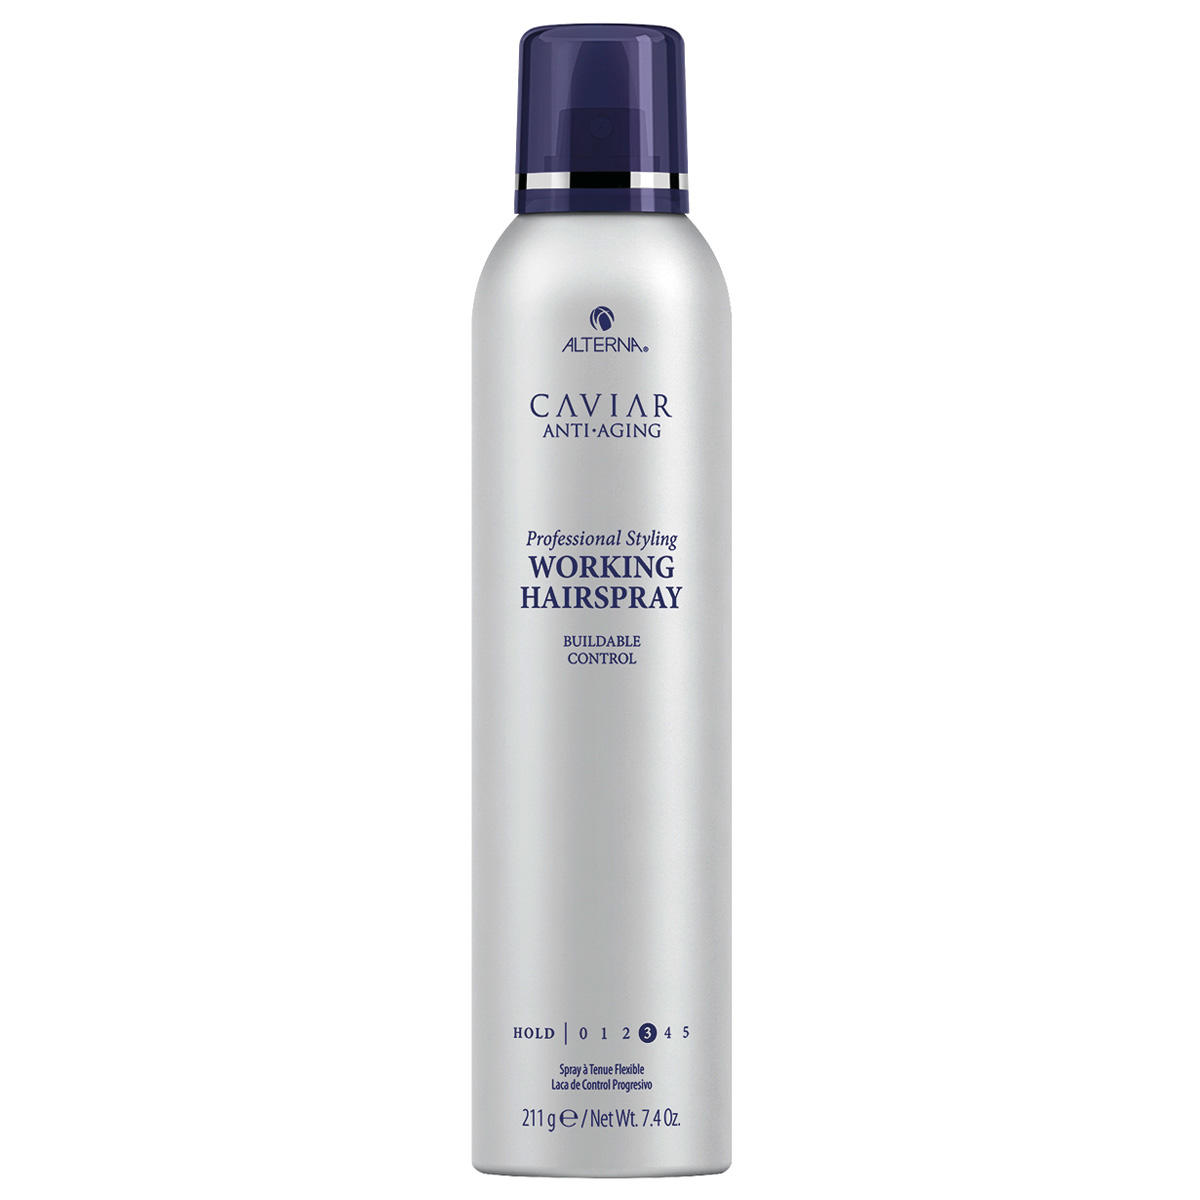 Alterna Caviar Anti-Aging Professional Styling Working Hairspray medium hold 211 g - 1